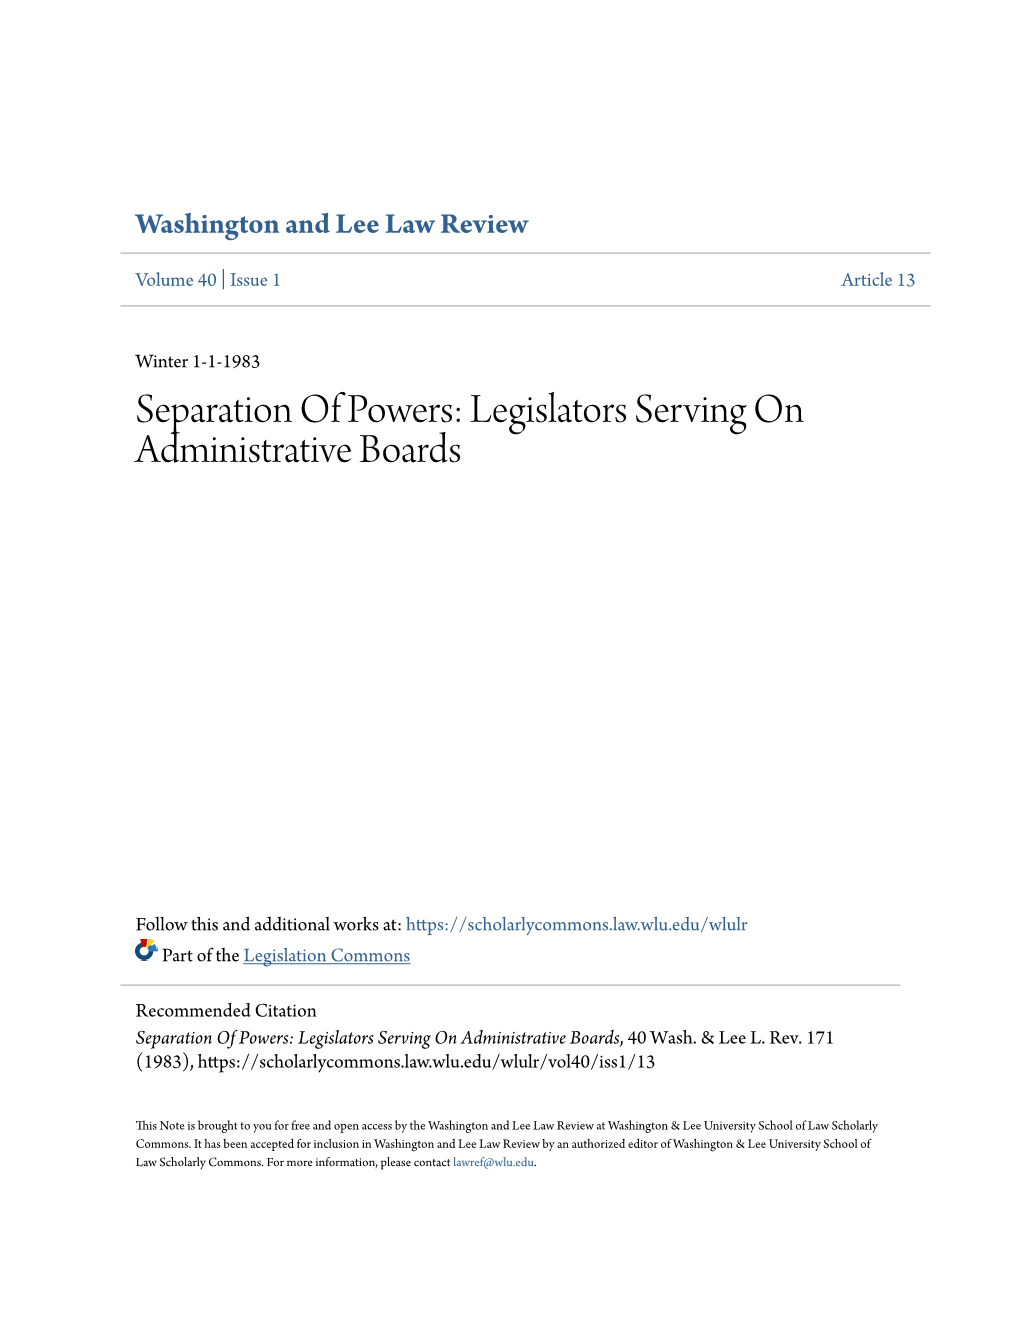 Separation of Powers: Legislators Serving on Administrative Boards